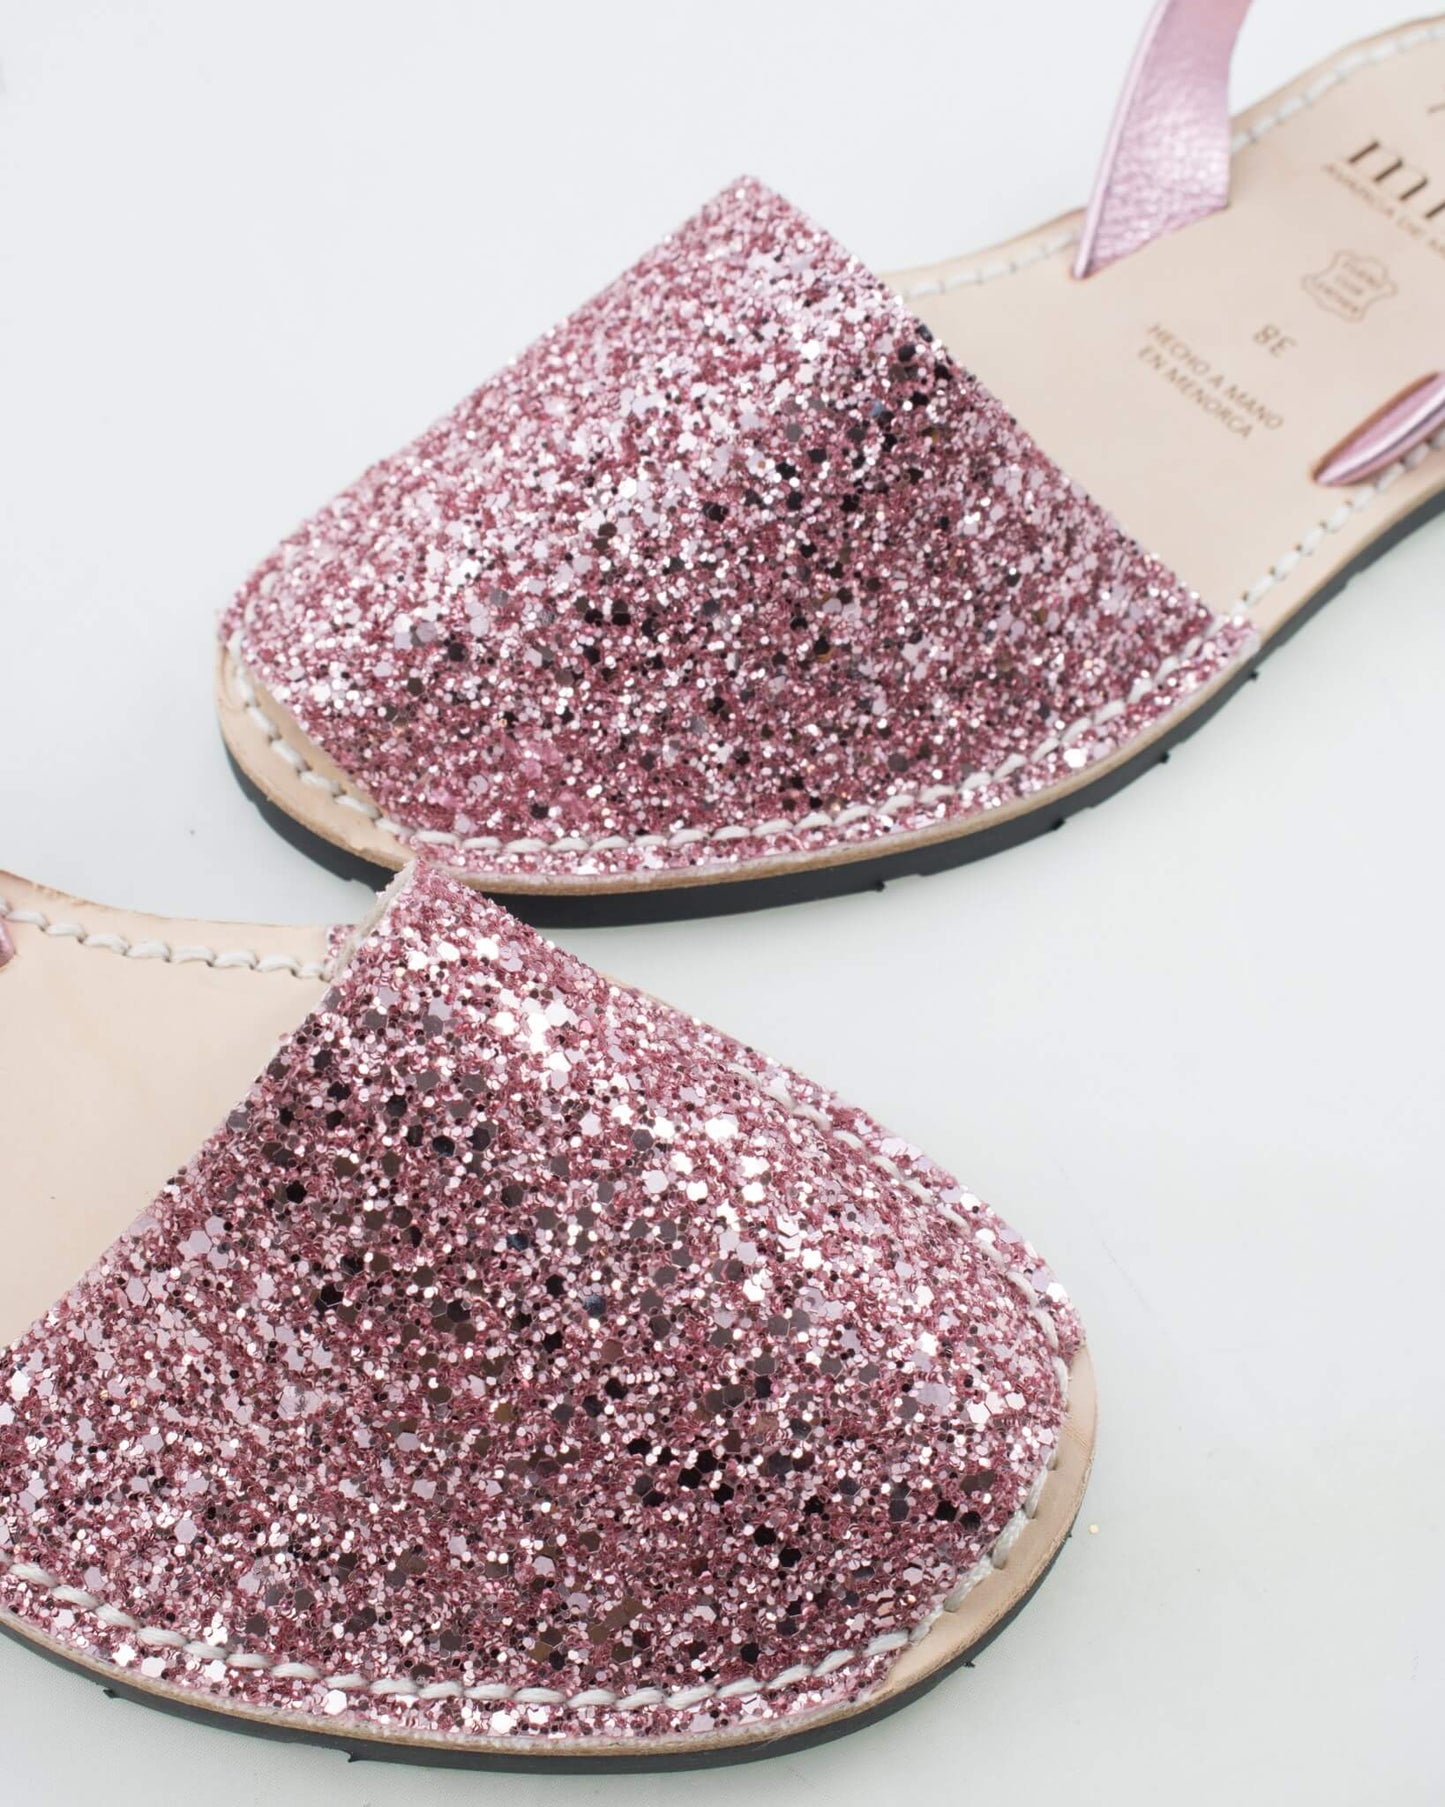 Sandale AVARCA din piele naturala - Glitter Candy